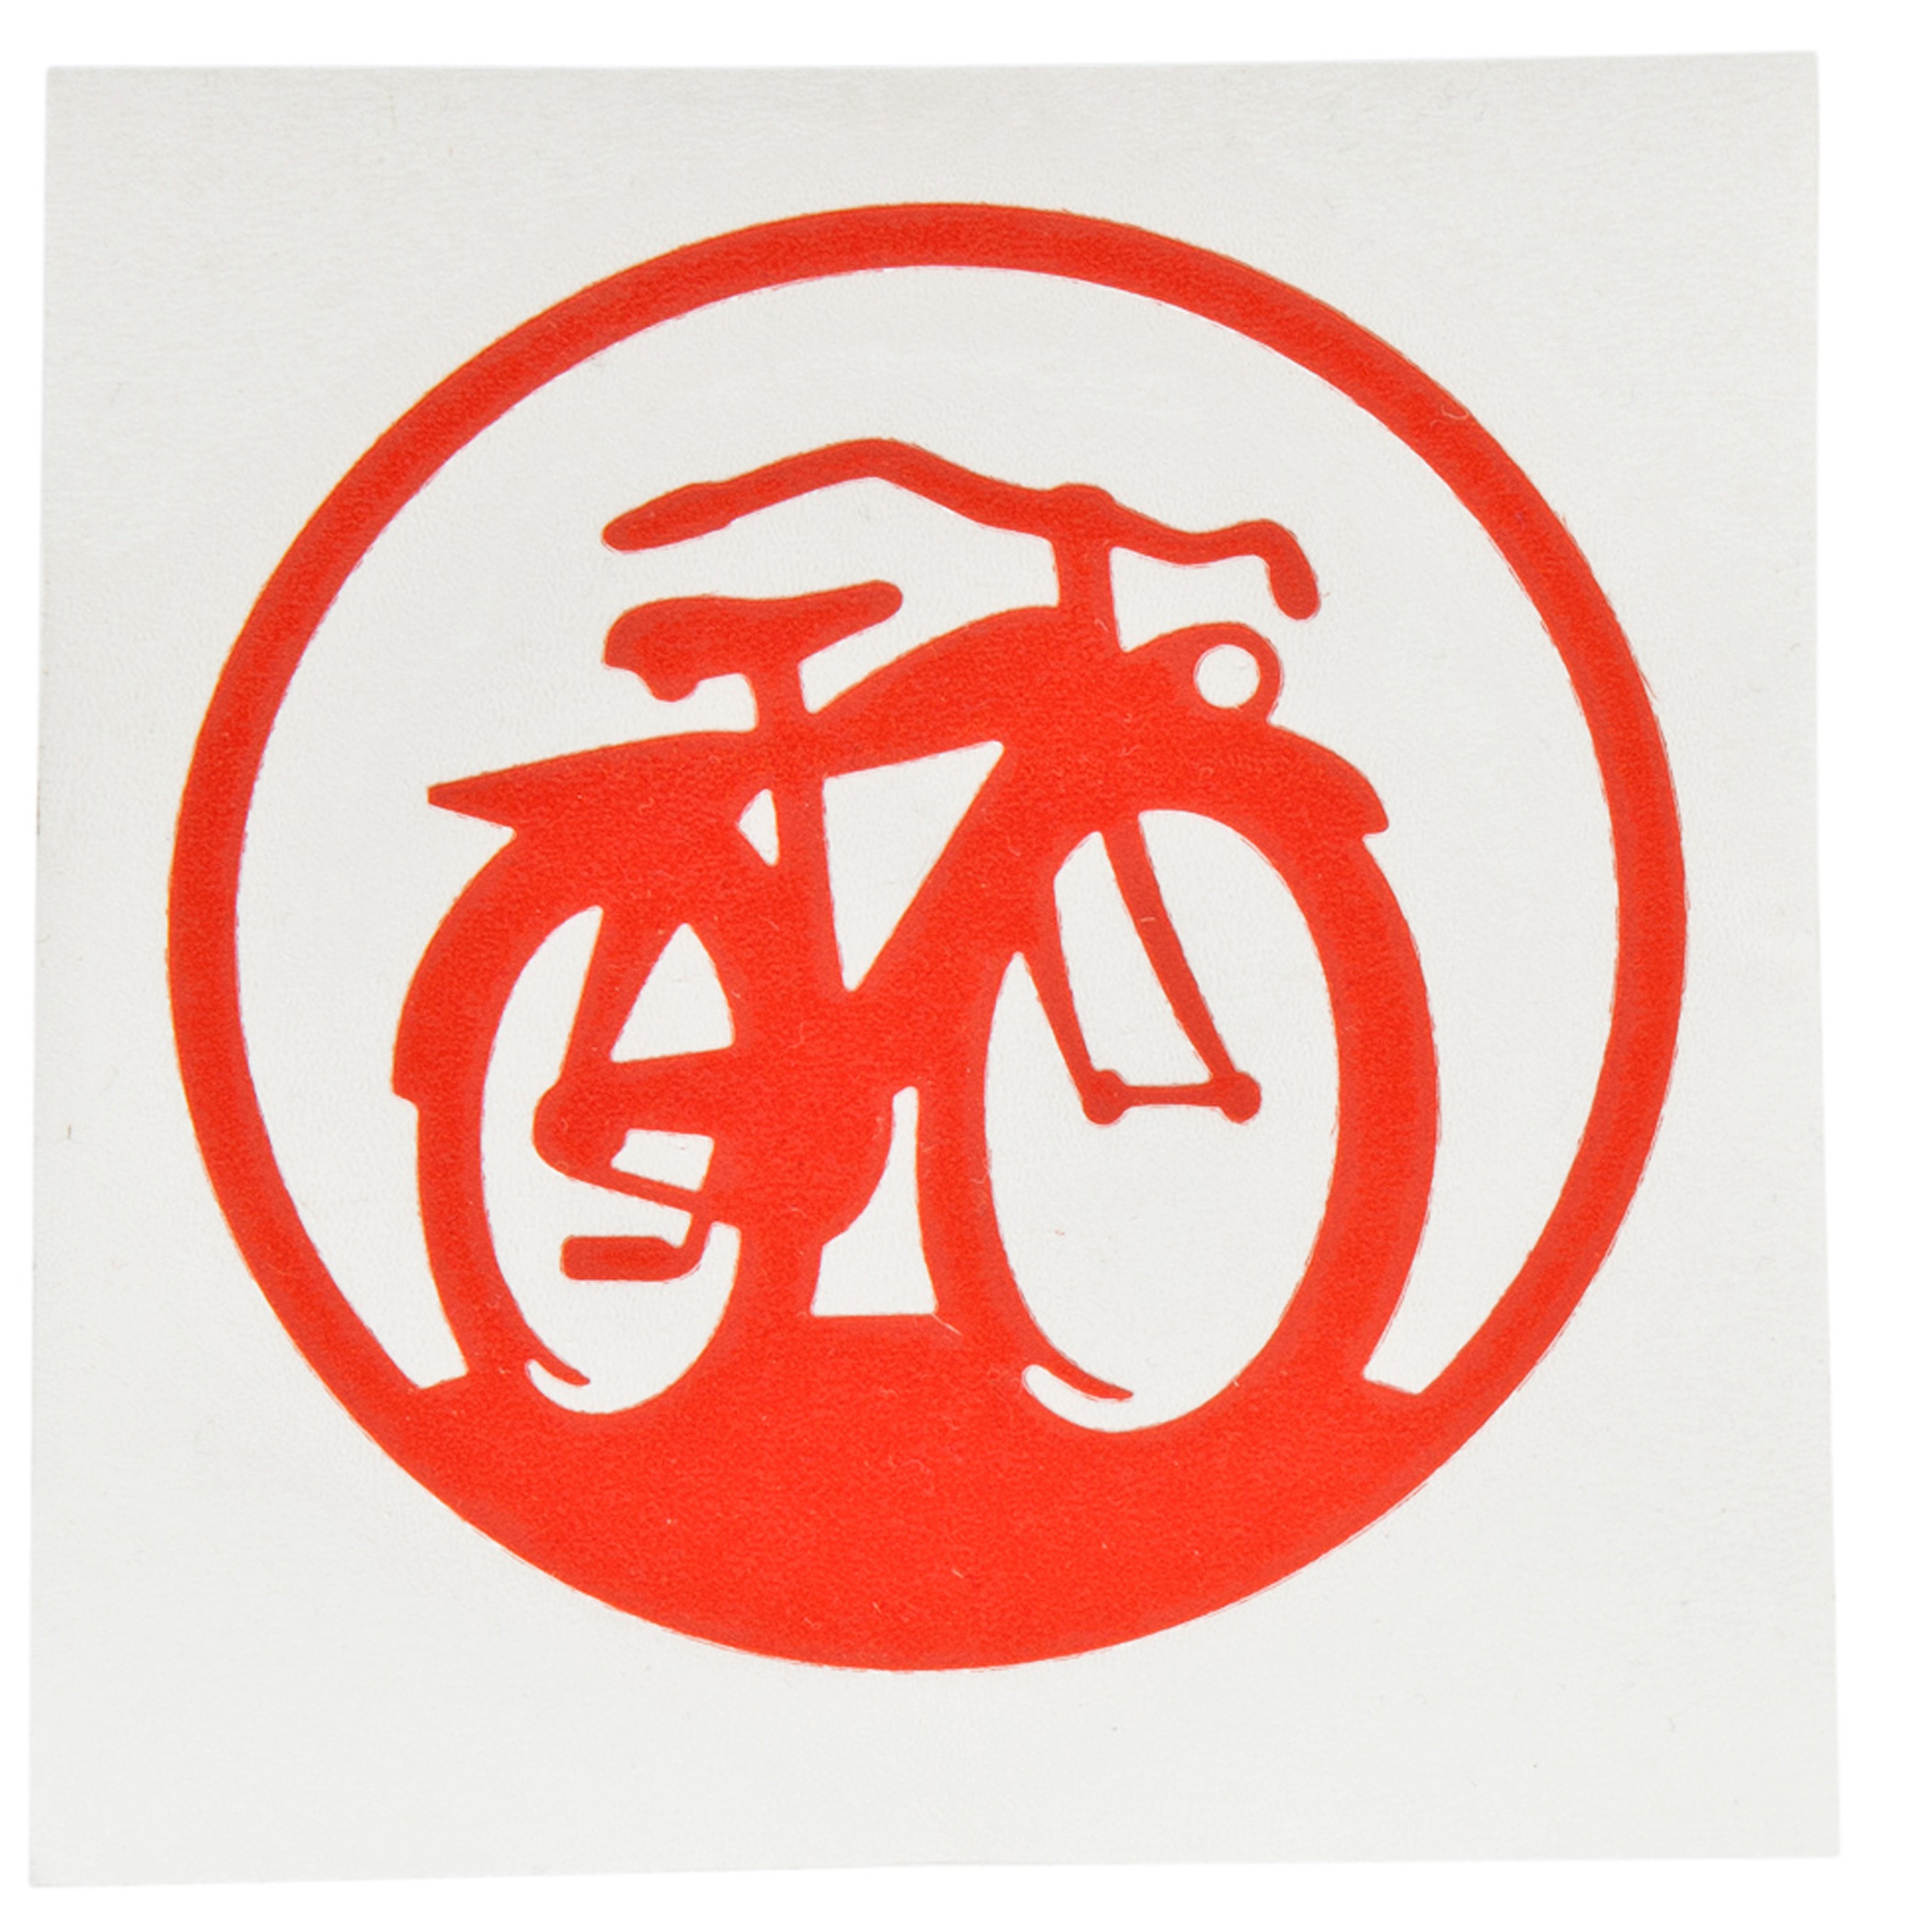 New Belgium Fat Tire Bicycle Logo Decal